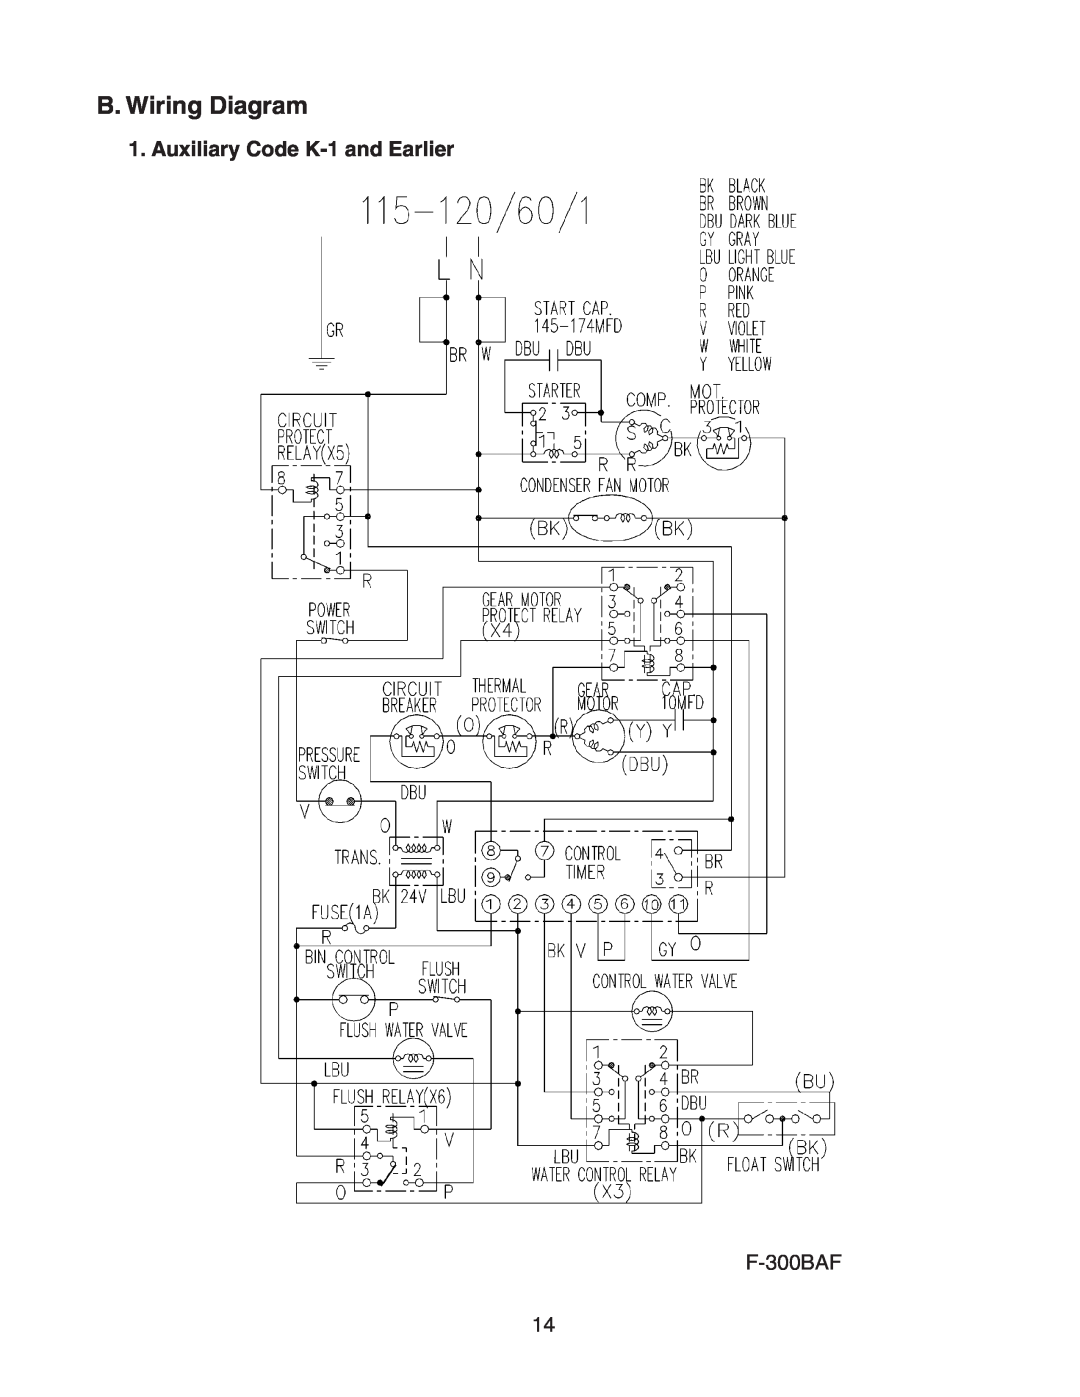 Hoshizaki F-300BAF service manual B. Wiring Diagram, Auxiliary Code K-1 and Earlier 